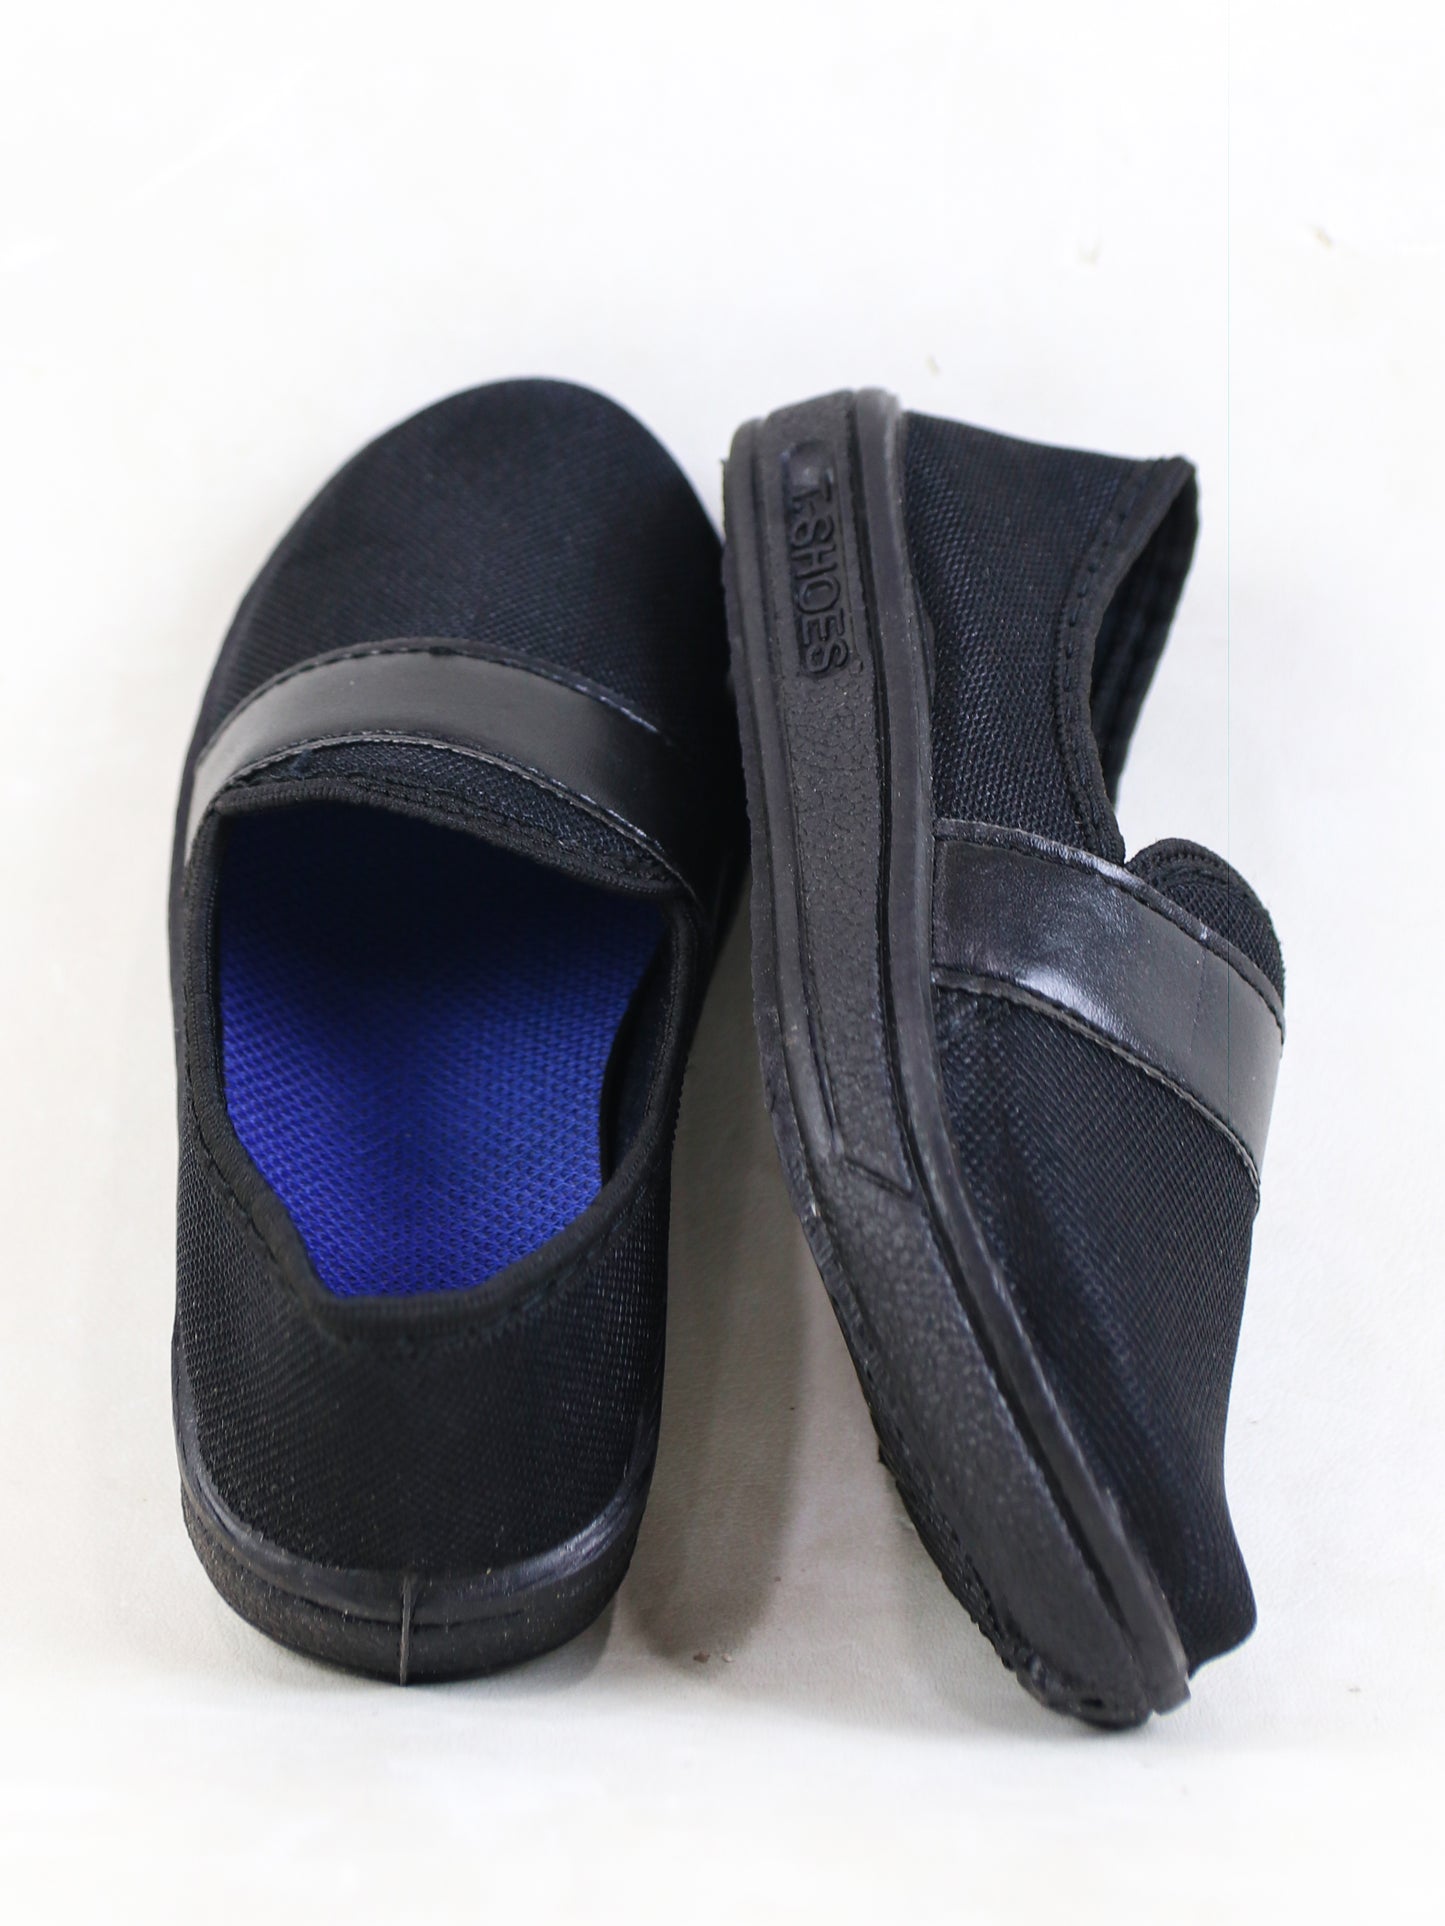 BS55 Boys Slip-On Shoes 8Yrs - 12Yrs Black